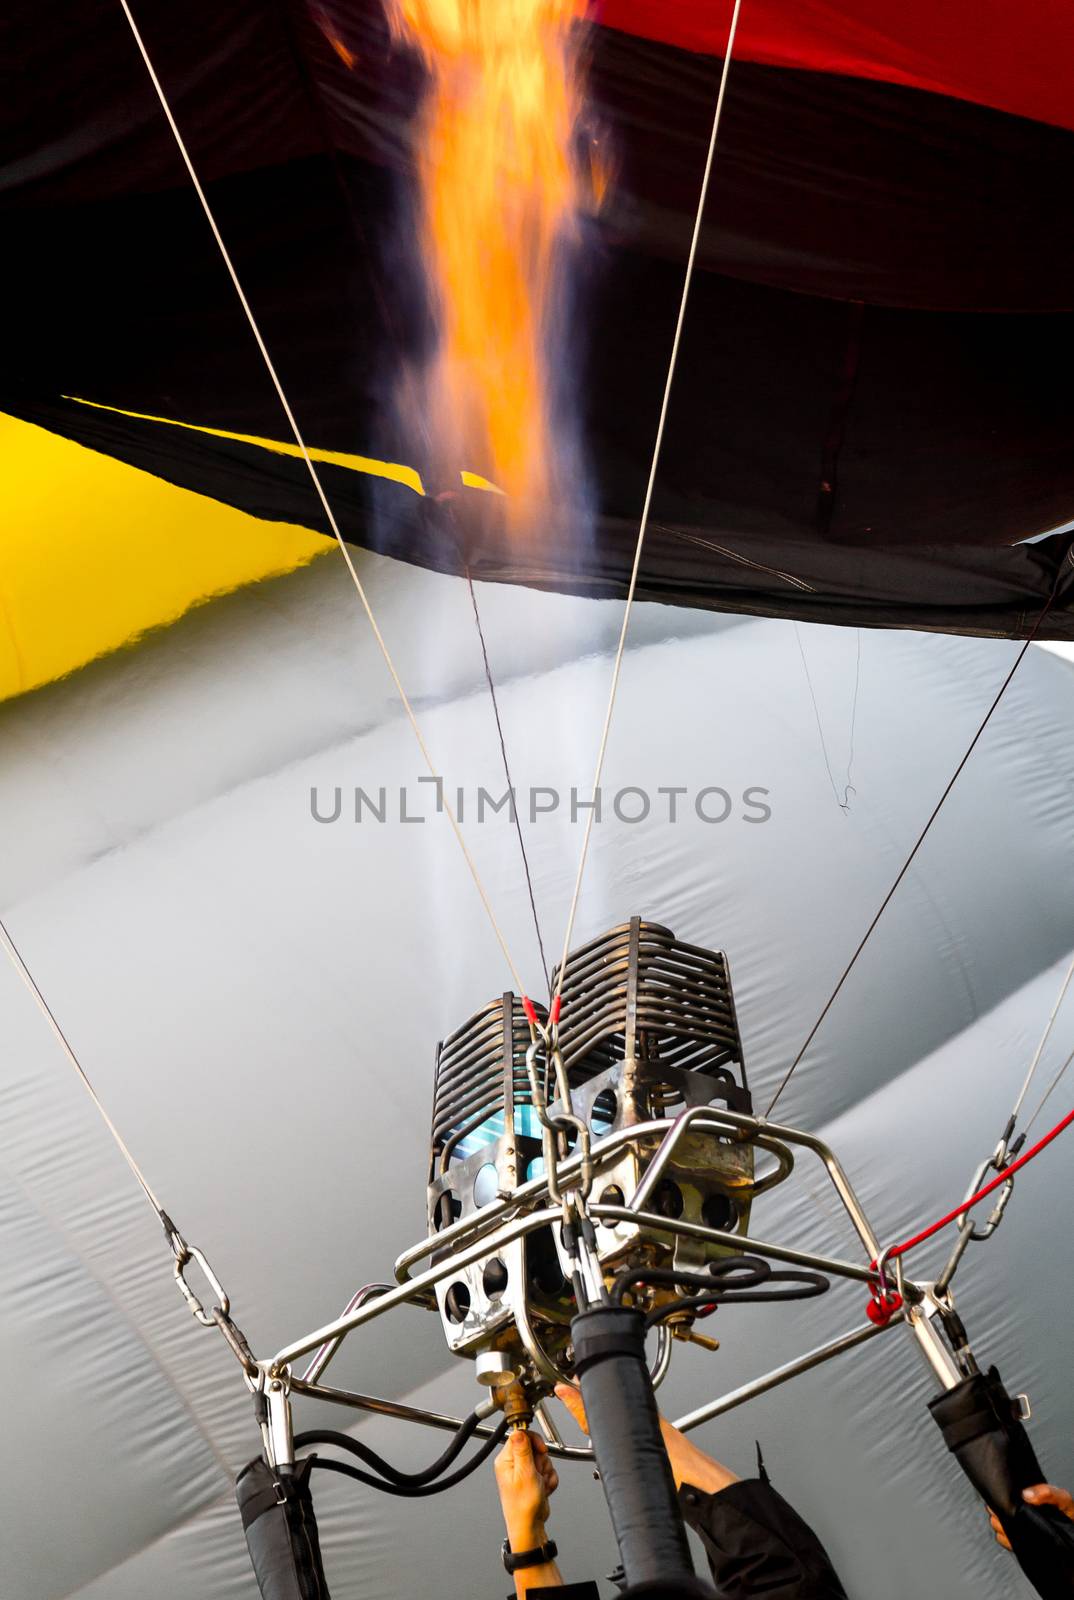 hot air ballon burner engine in action